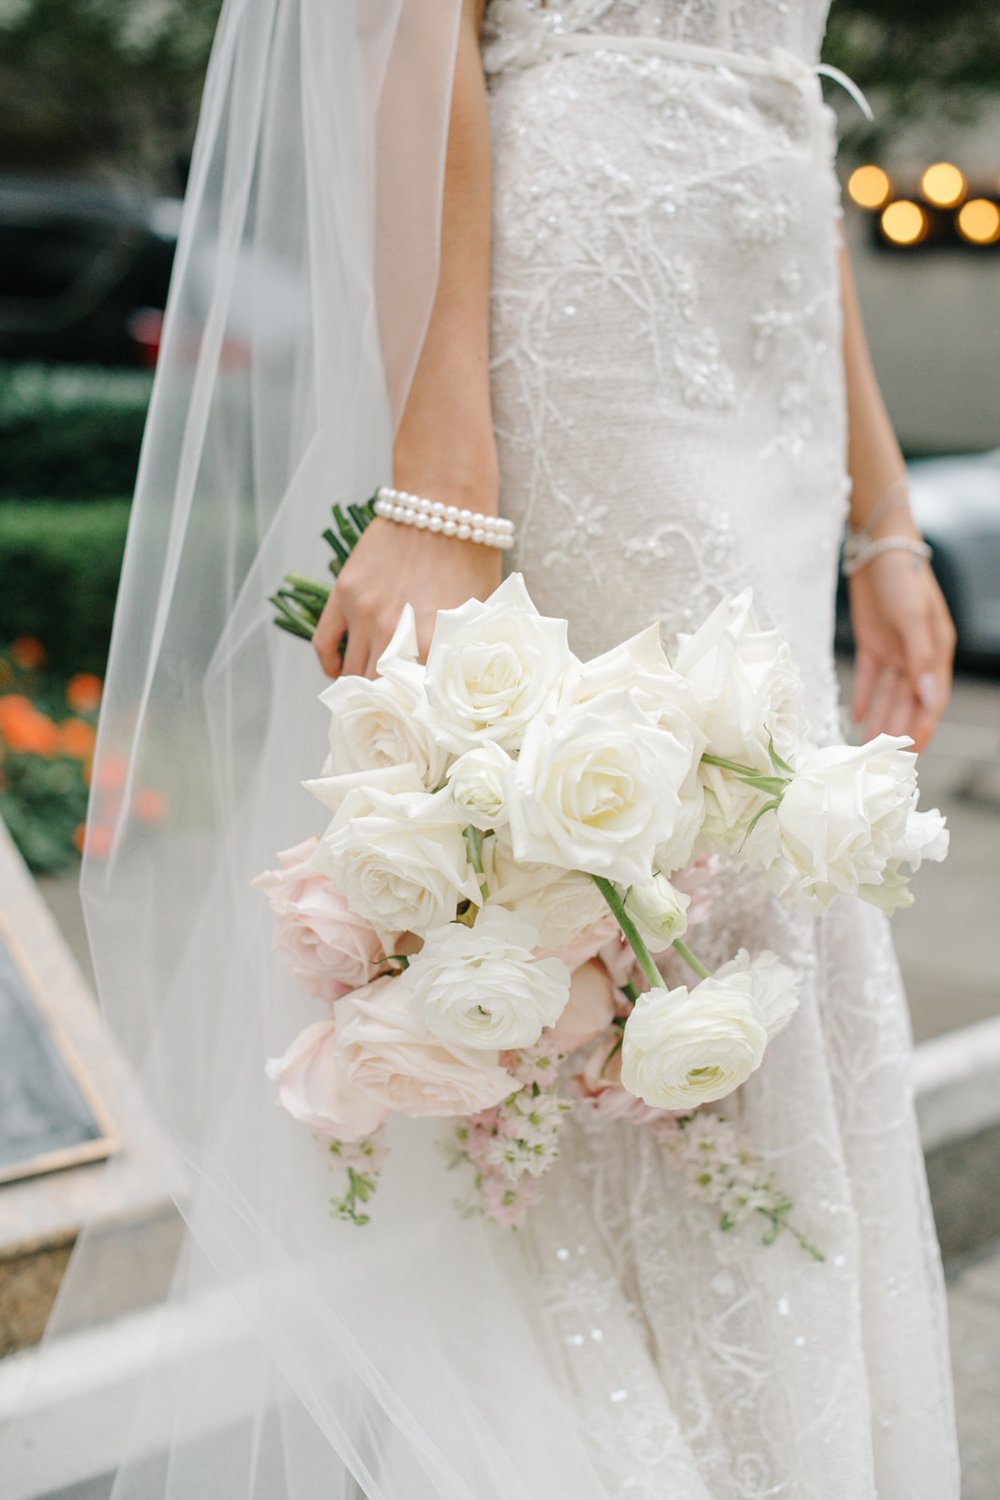 Elegant White and Blush Rose Bridal Bouquet at Fairmont Olympic Hotel Wedding